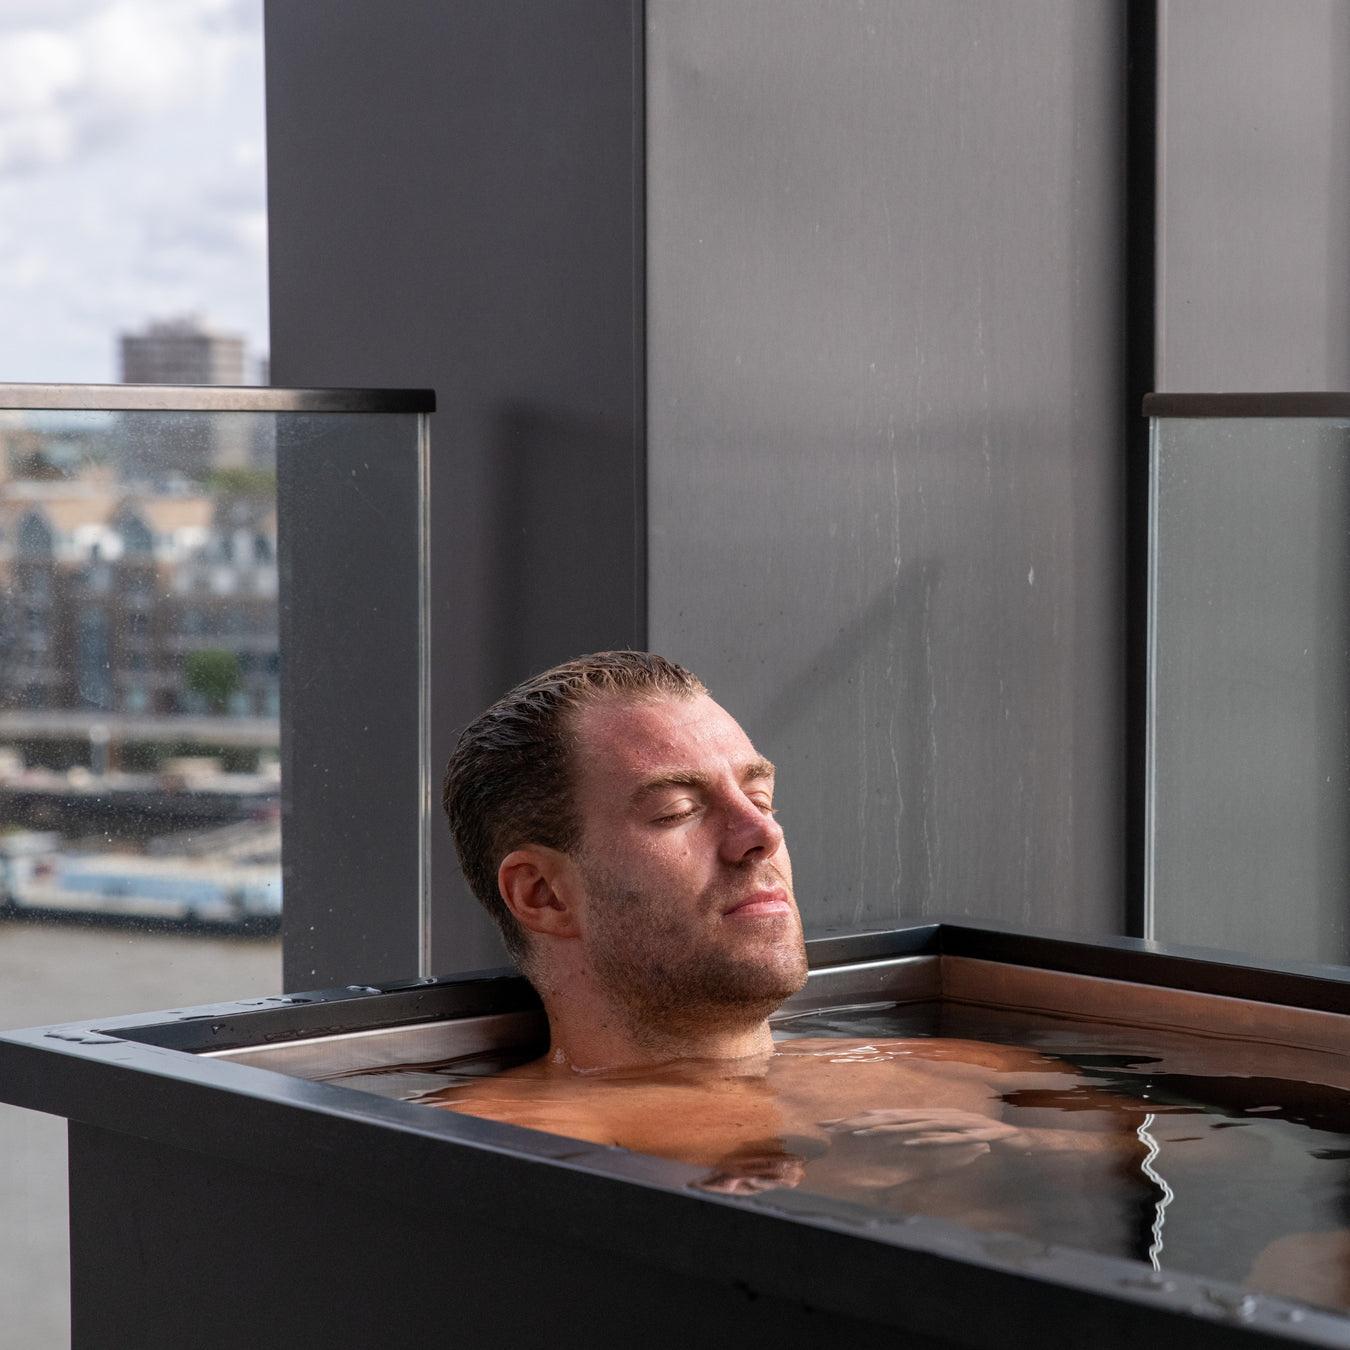 Chill Tubs Ice Bath Bradley Simmonds Photoshoot Relaxing Social Media